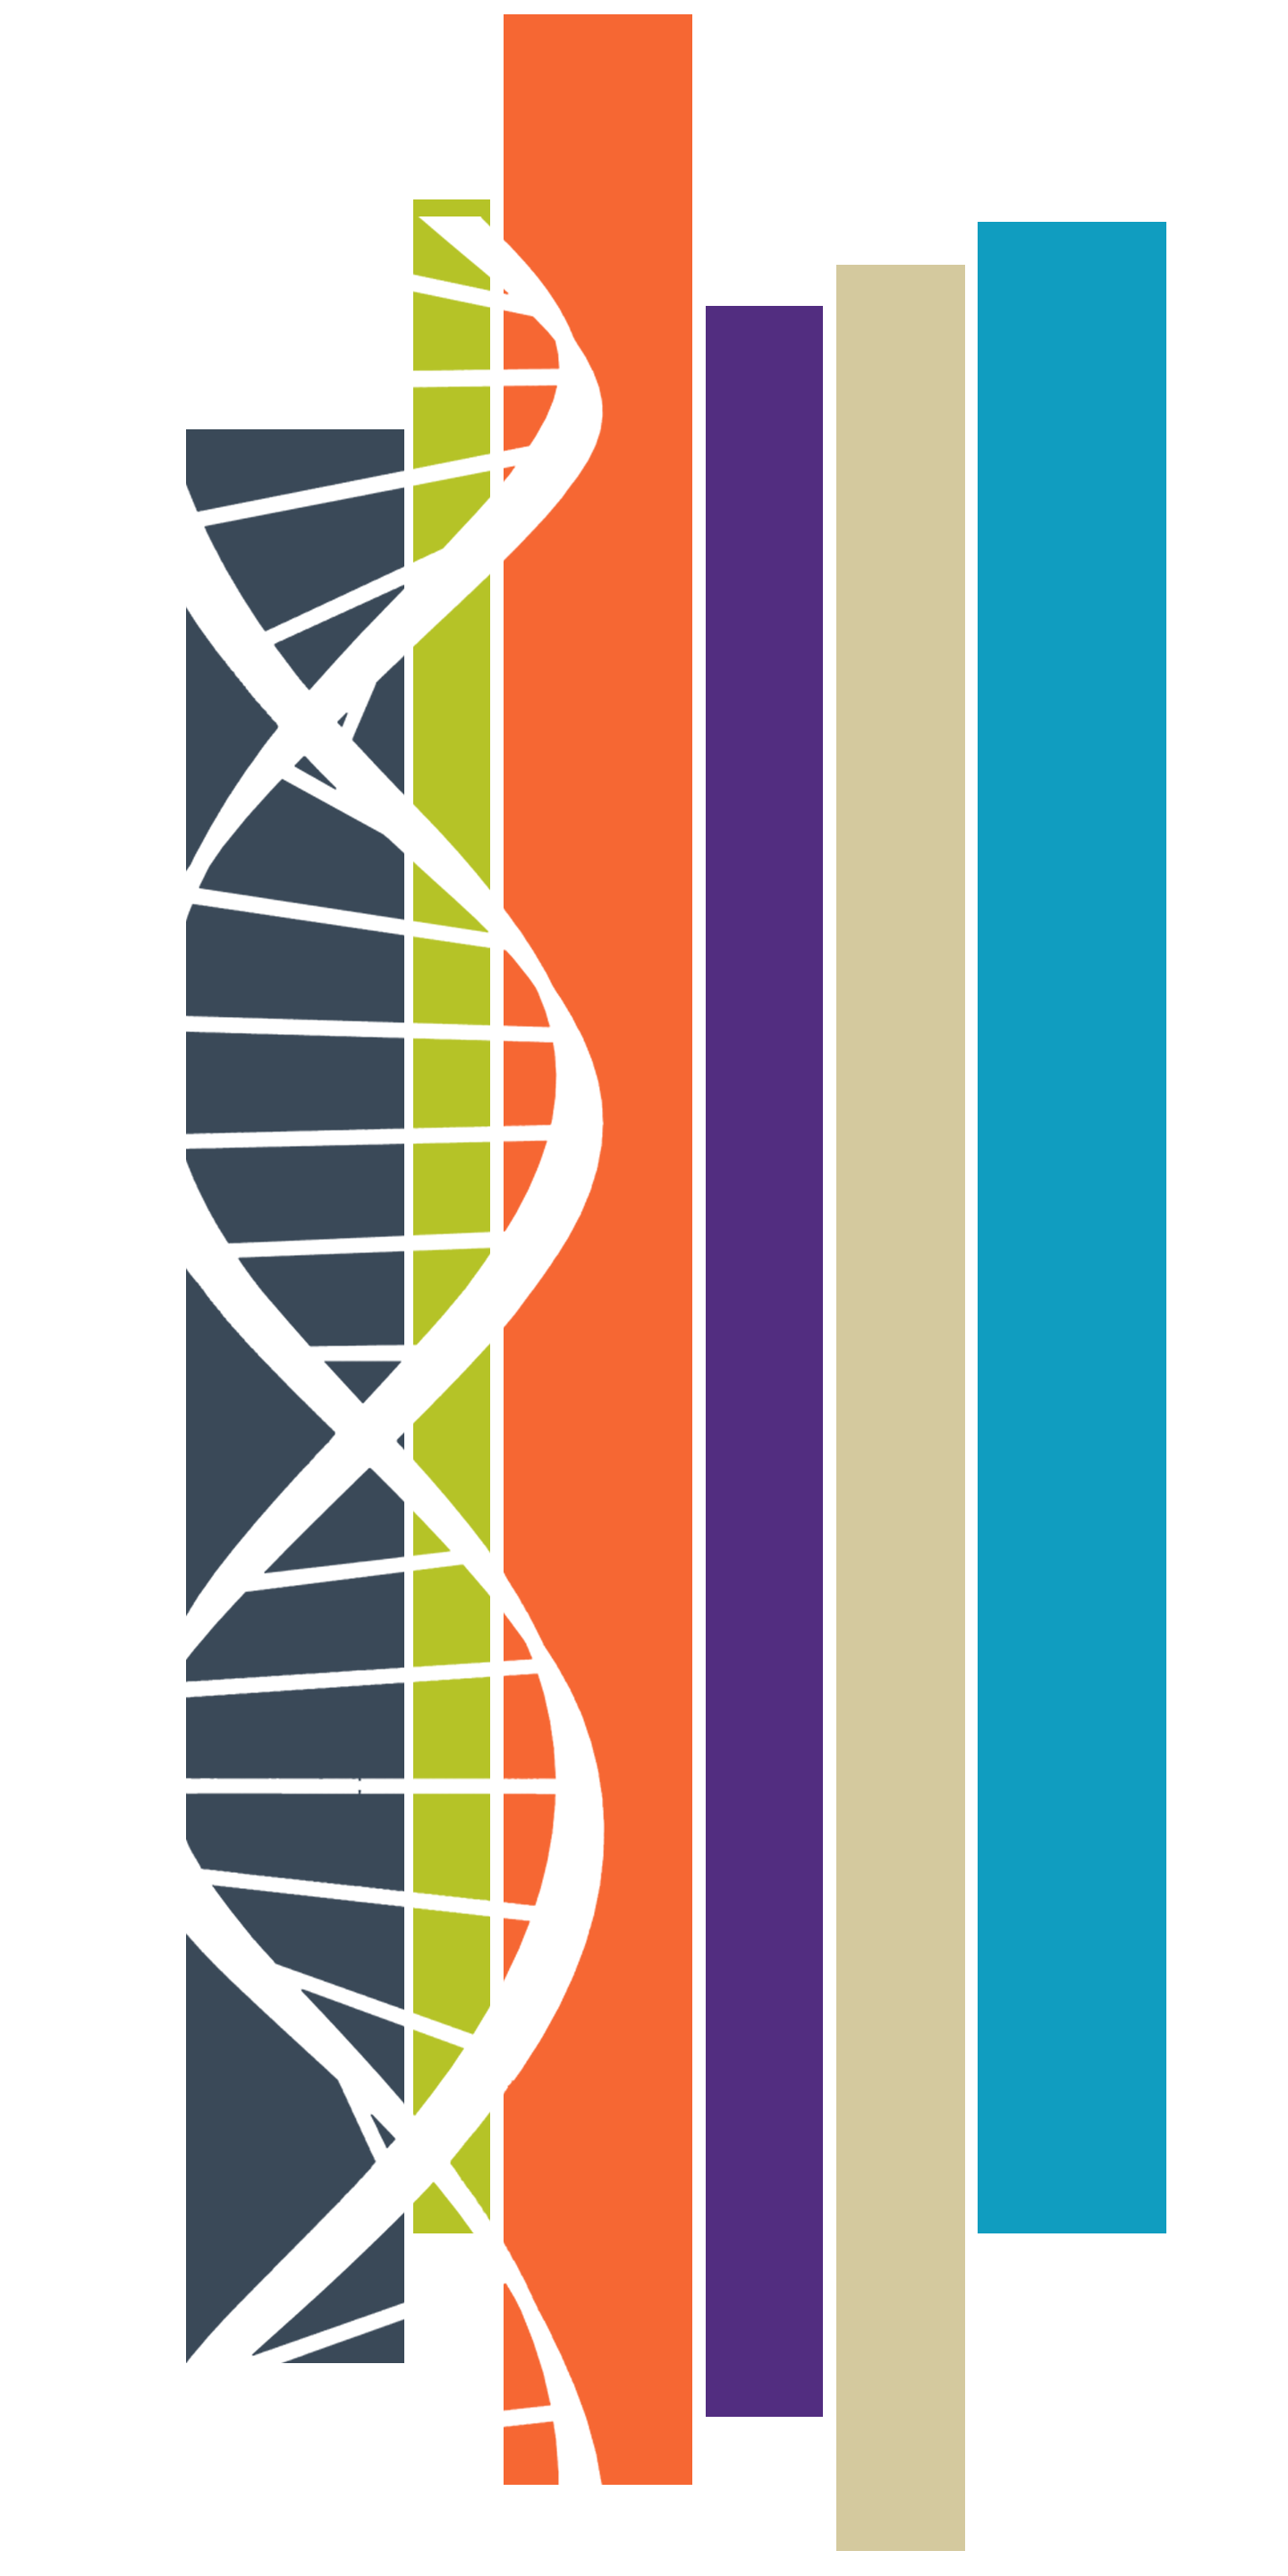 Decorative image of DNA